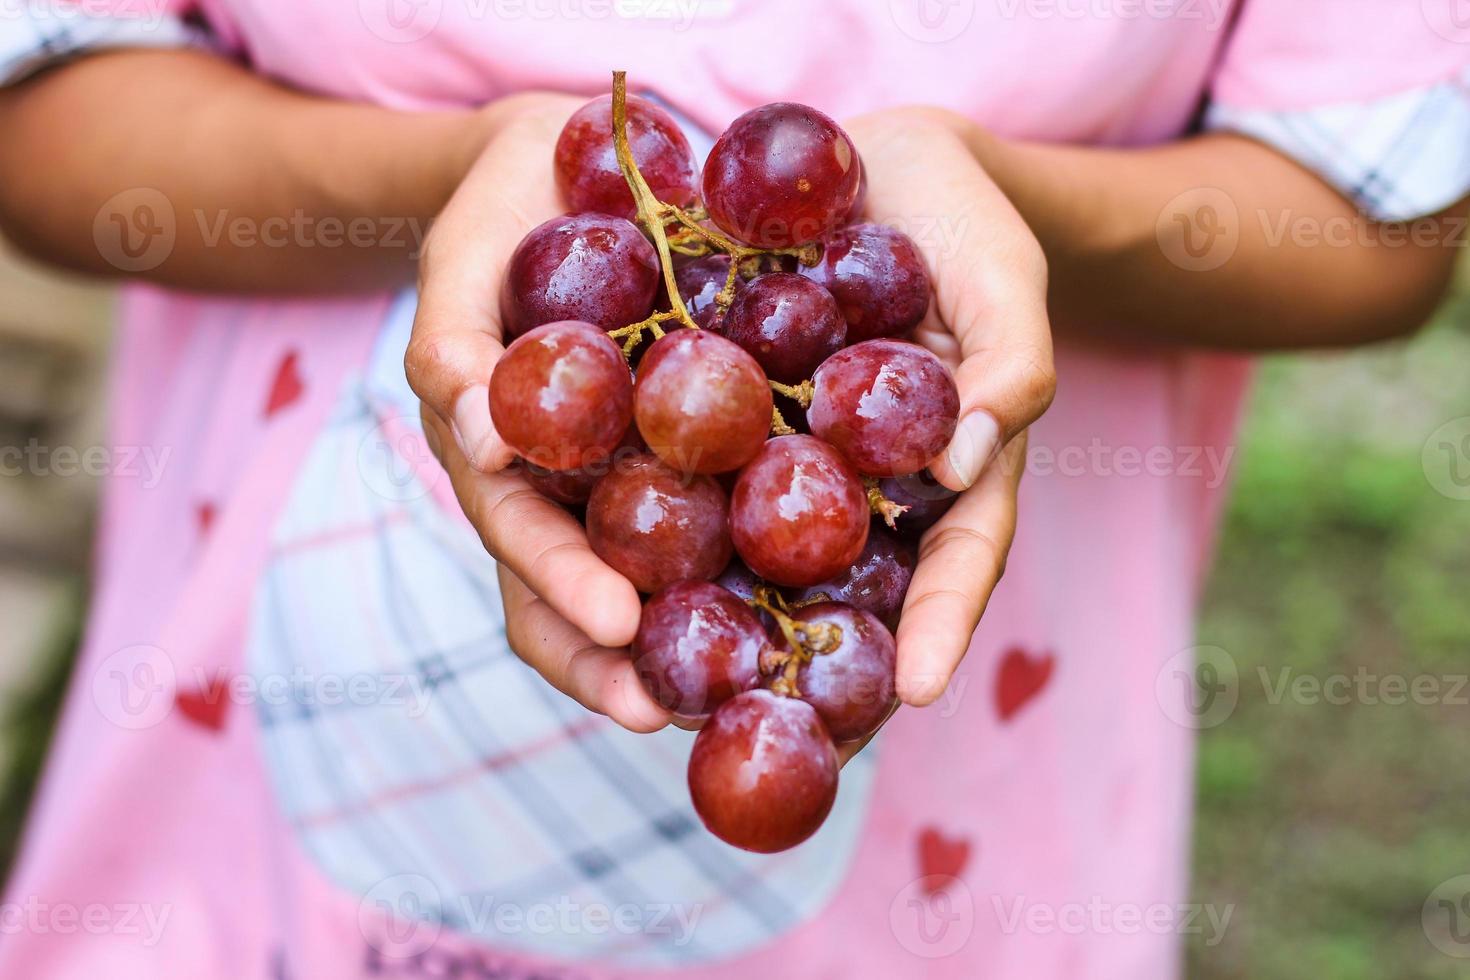 uva rossa fresca foto